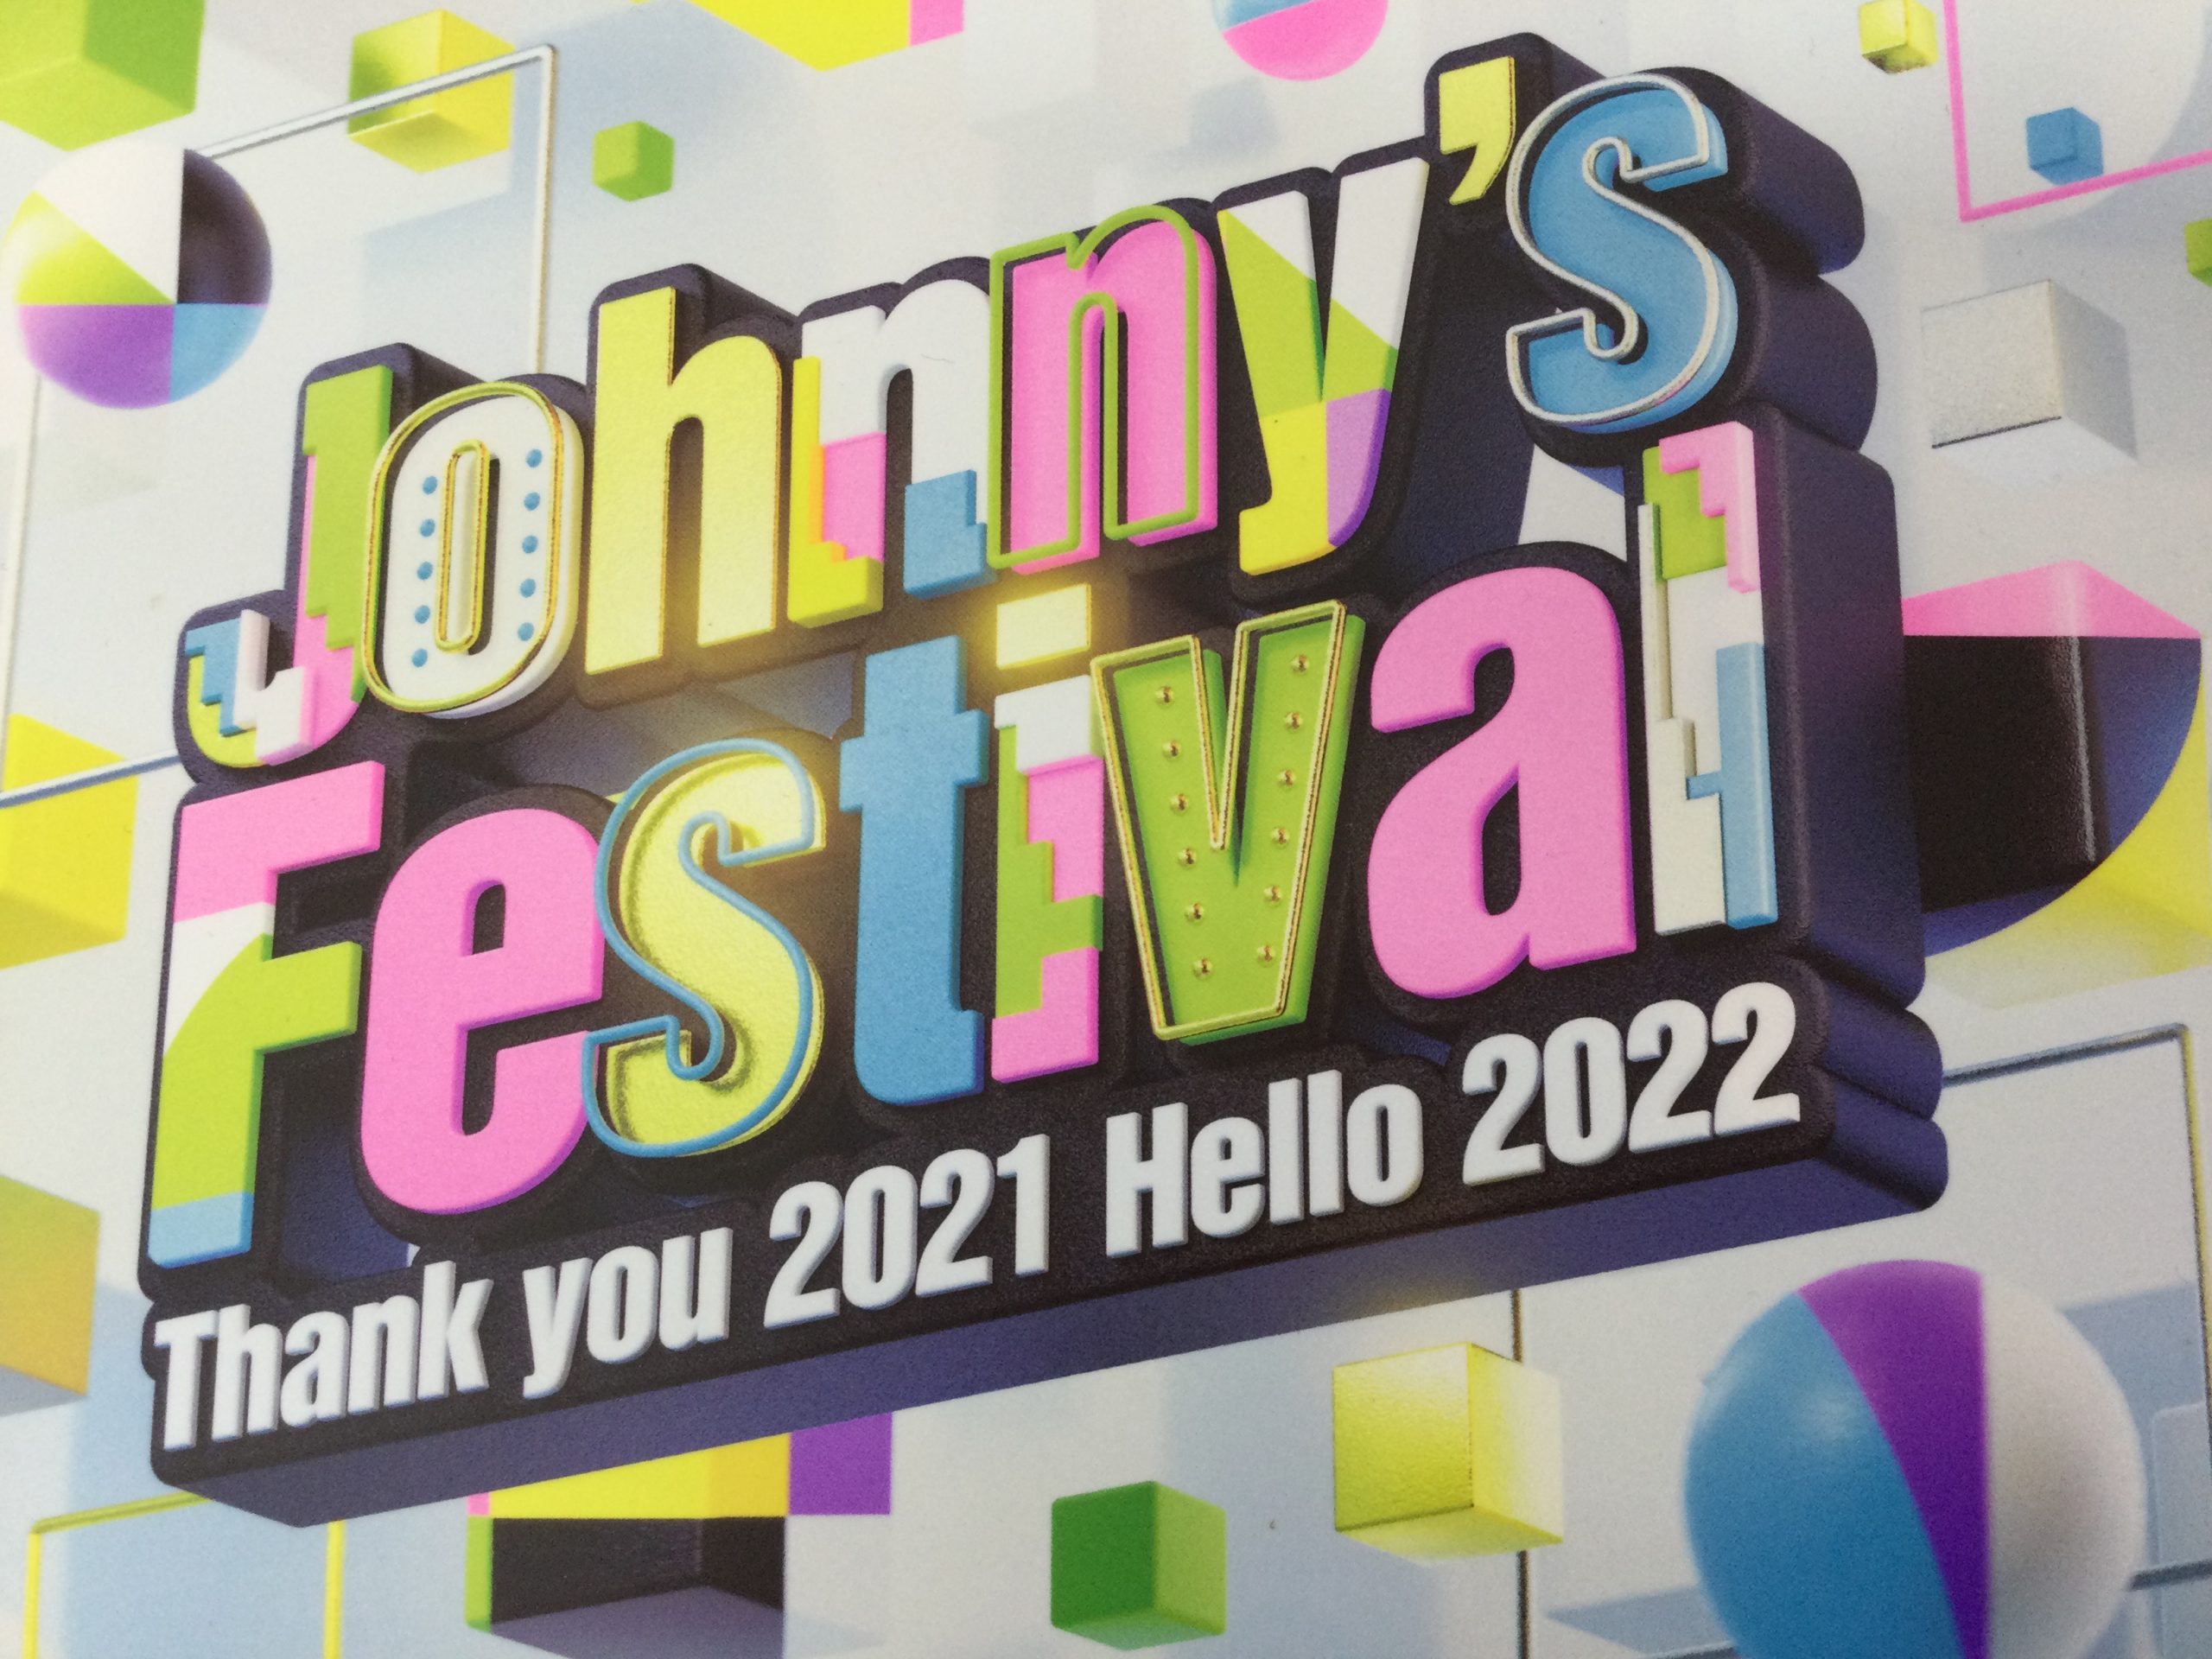 Johnny’s Festival -Thank you 2021 Hello 2022- [通常盤初回プレス仕様]